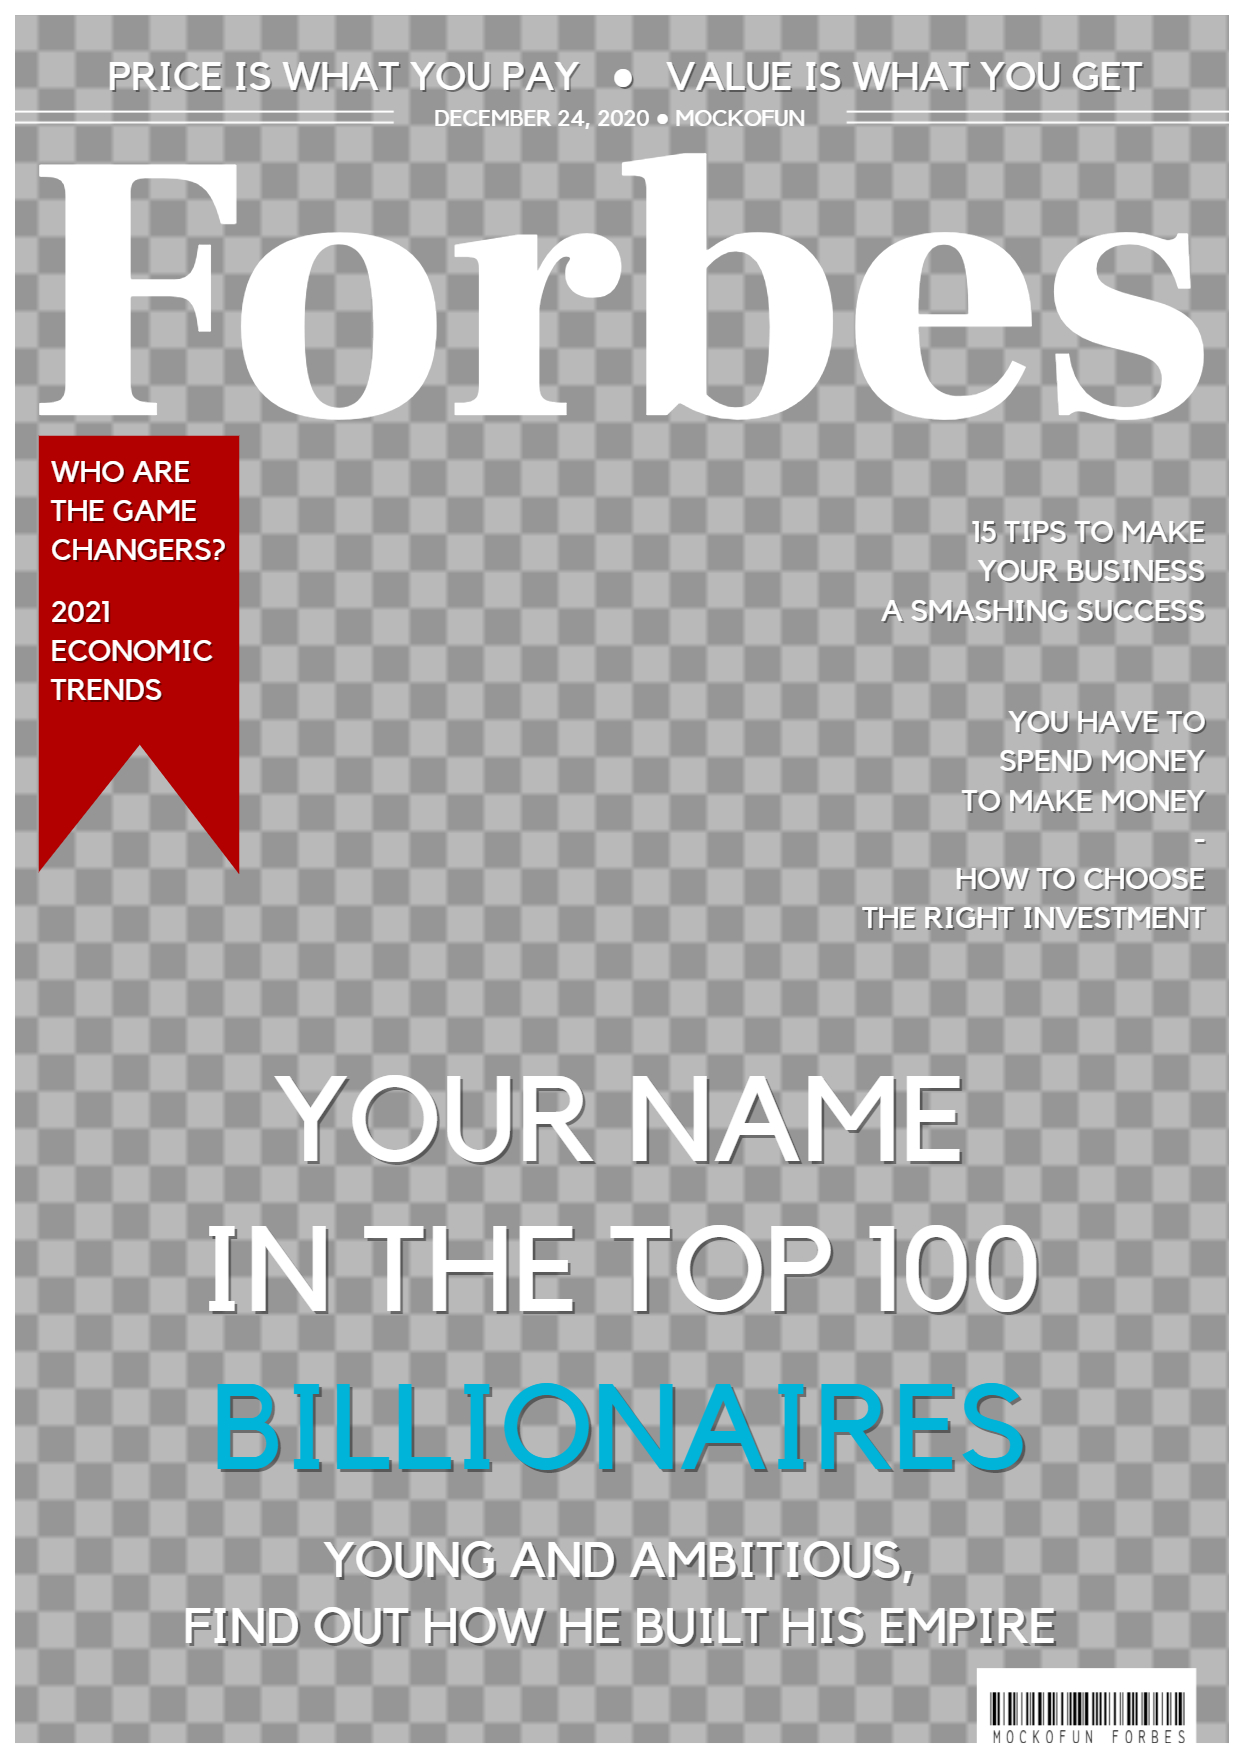 Forbes Magazine Cover Template MockoFUN